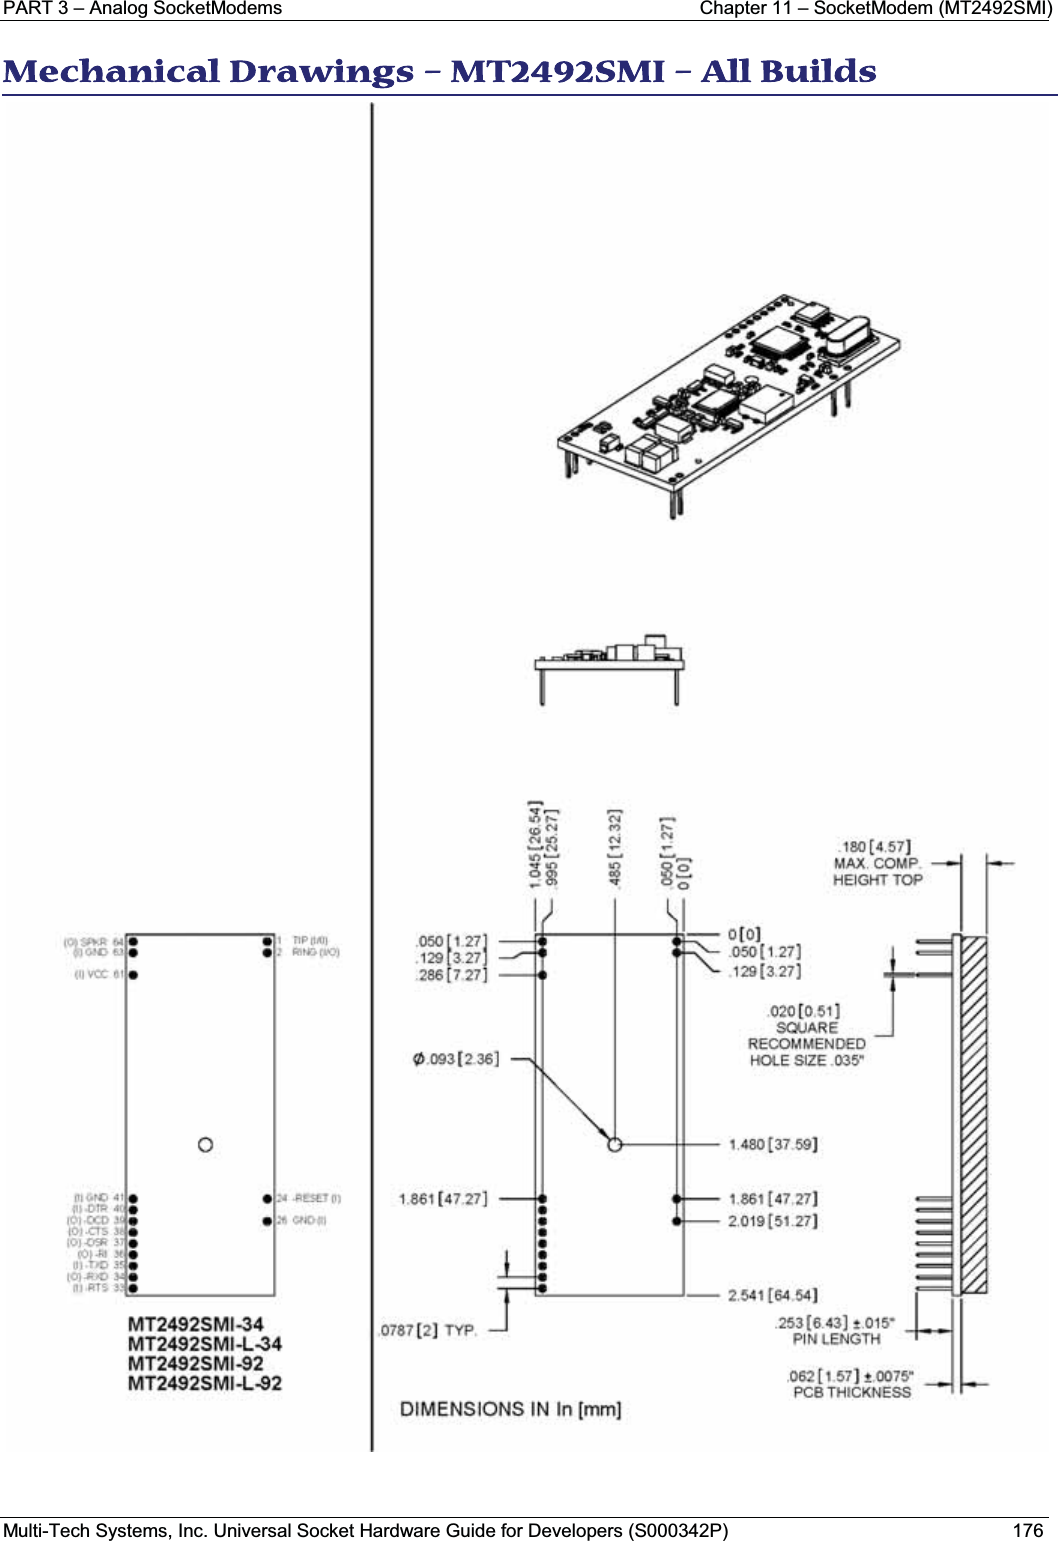 PART 3 – Analog SocketModems  Chapter 11 – SocketModem (MT2492SMI)Multi-Tech Systems, Inc. Universal Socket Hardware Guide for Developers (S000342P) 176MMechanical Drawings – MT2492SMI – All Builds 